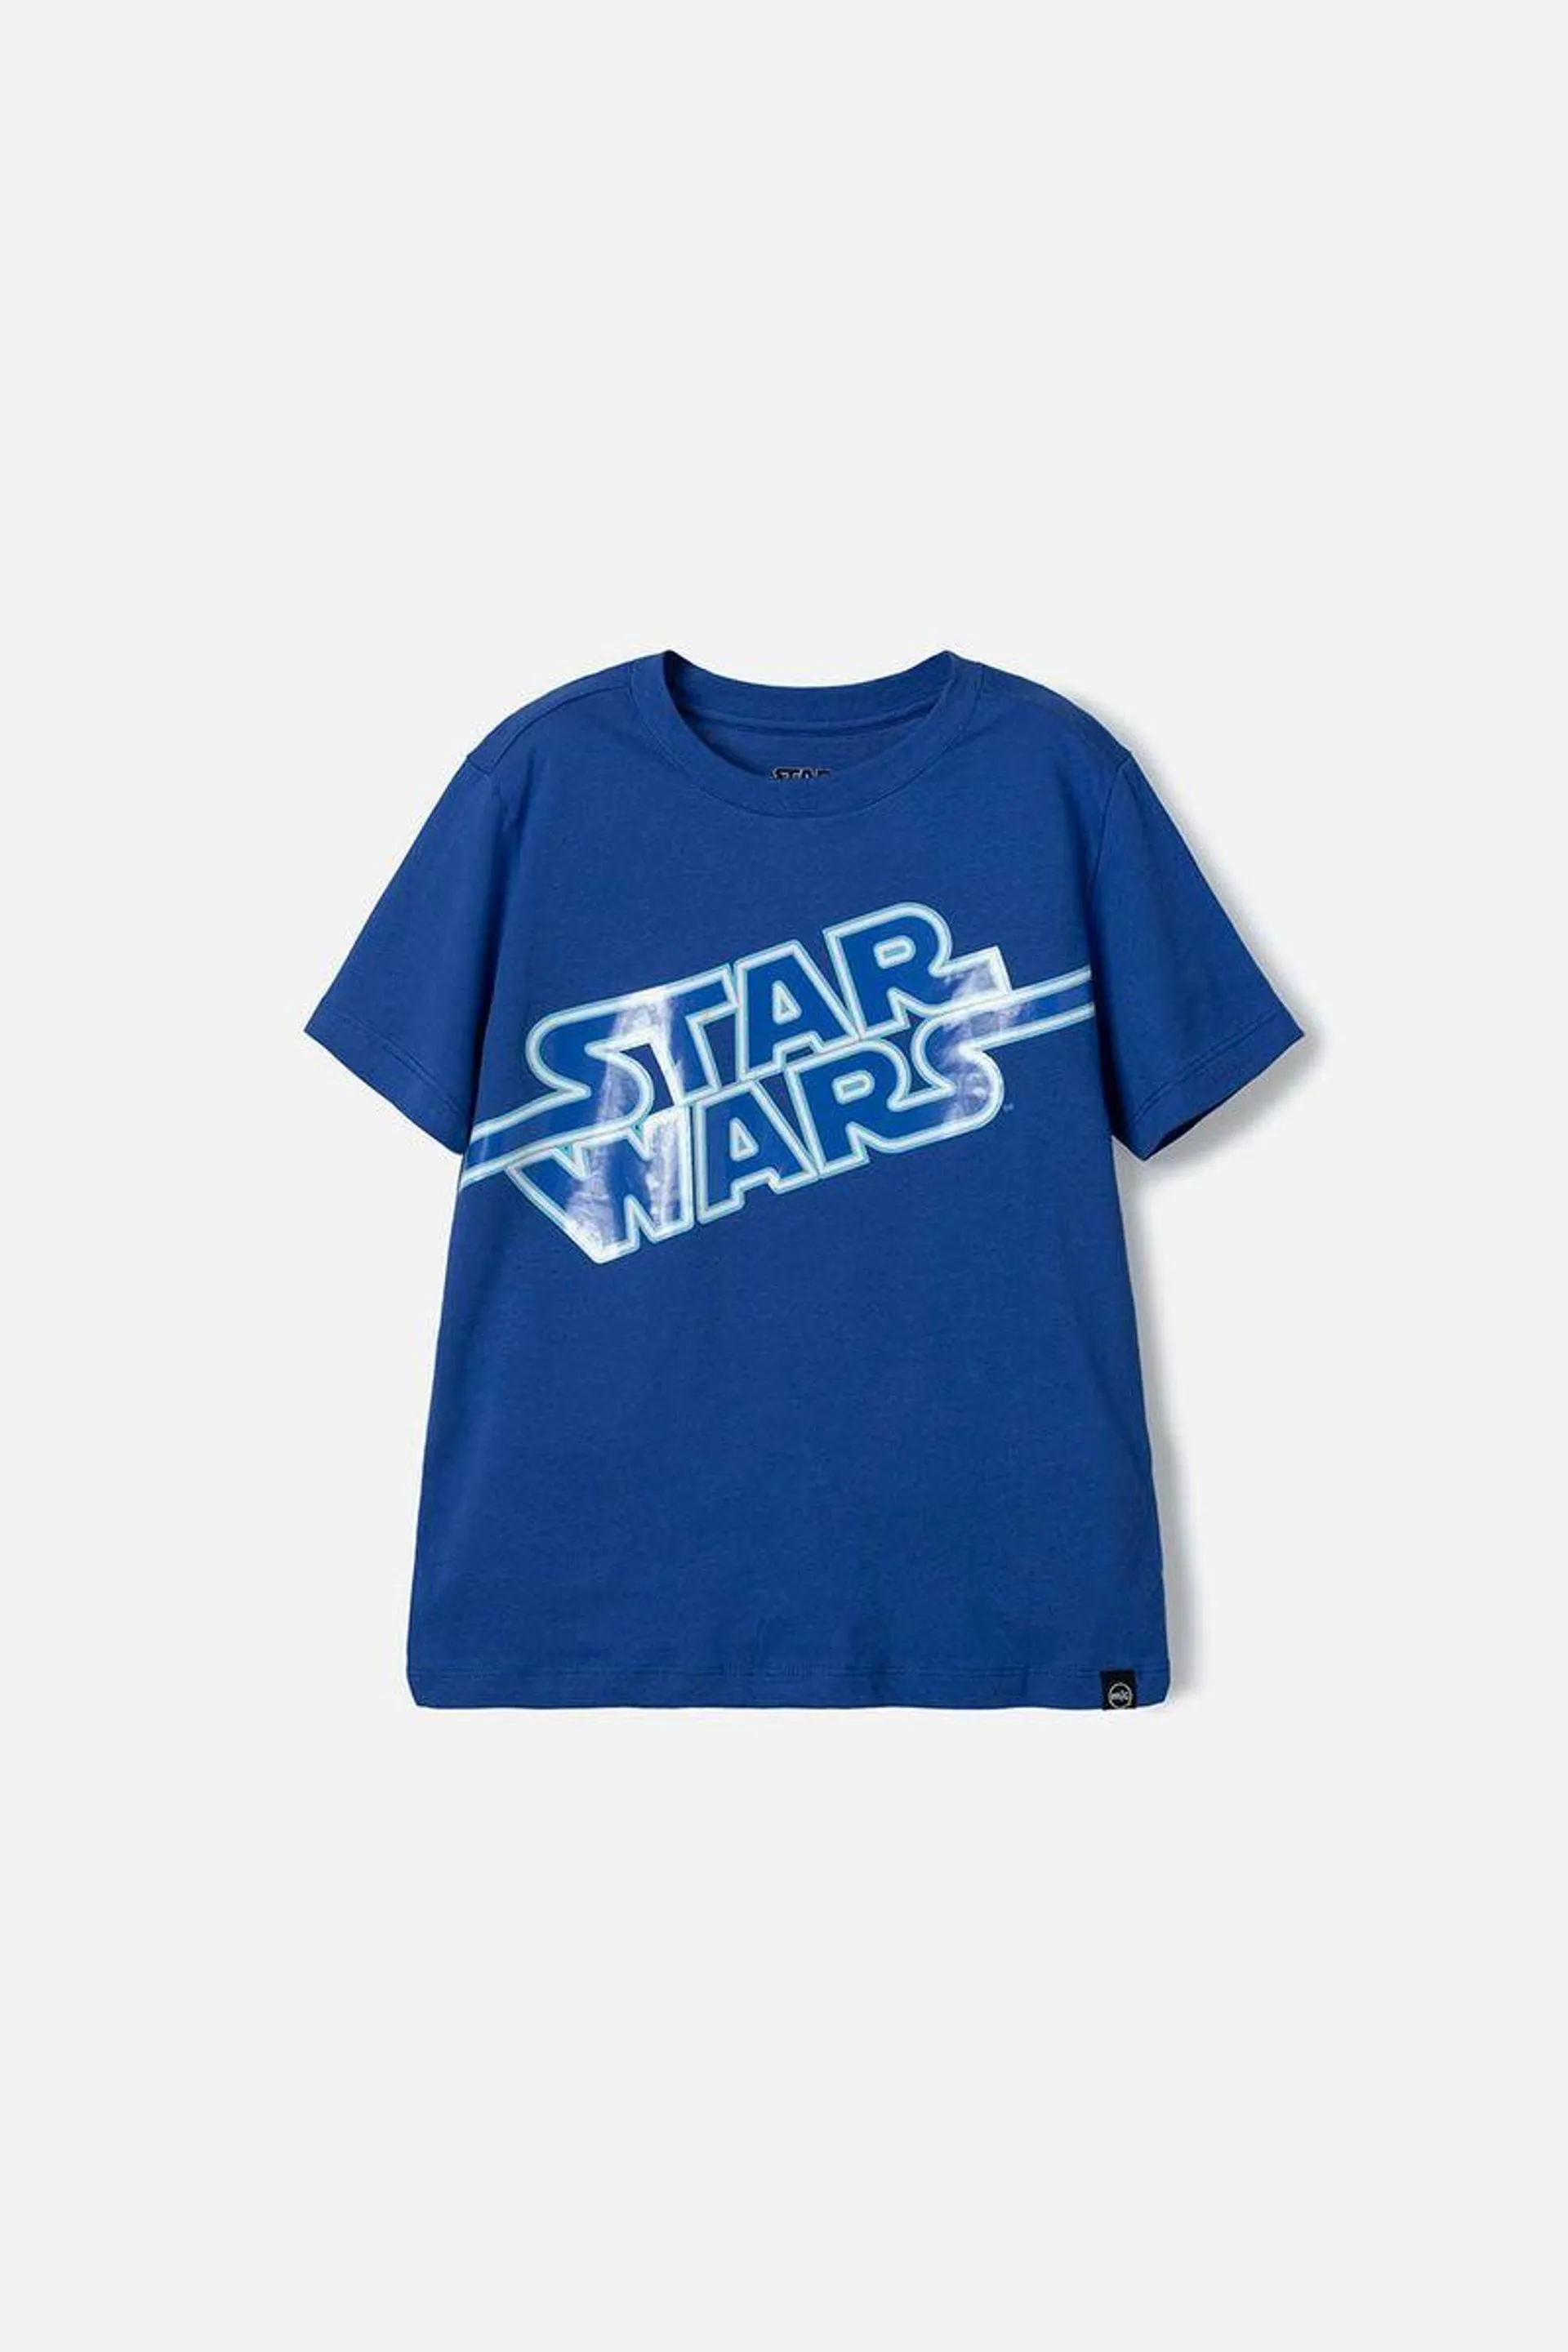 Camiseta Star Wars manga corta azul para Niño